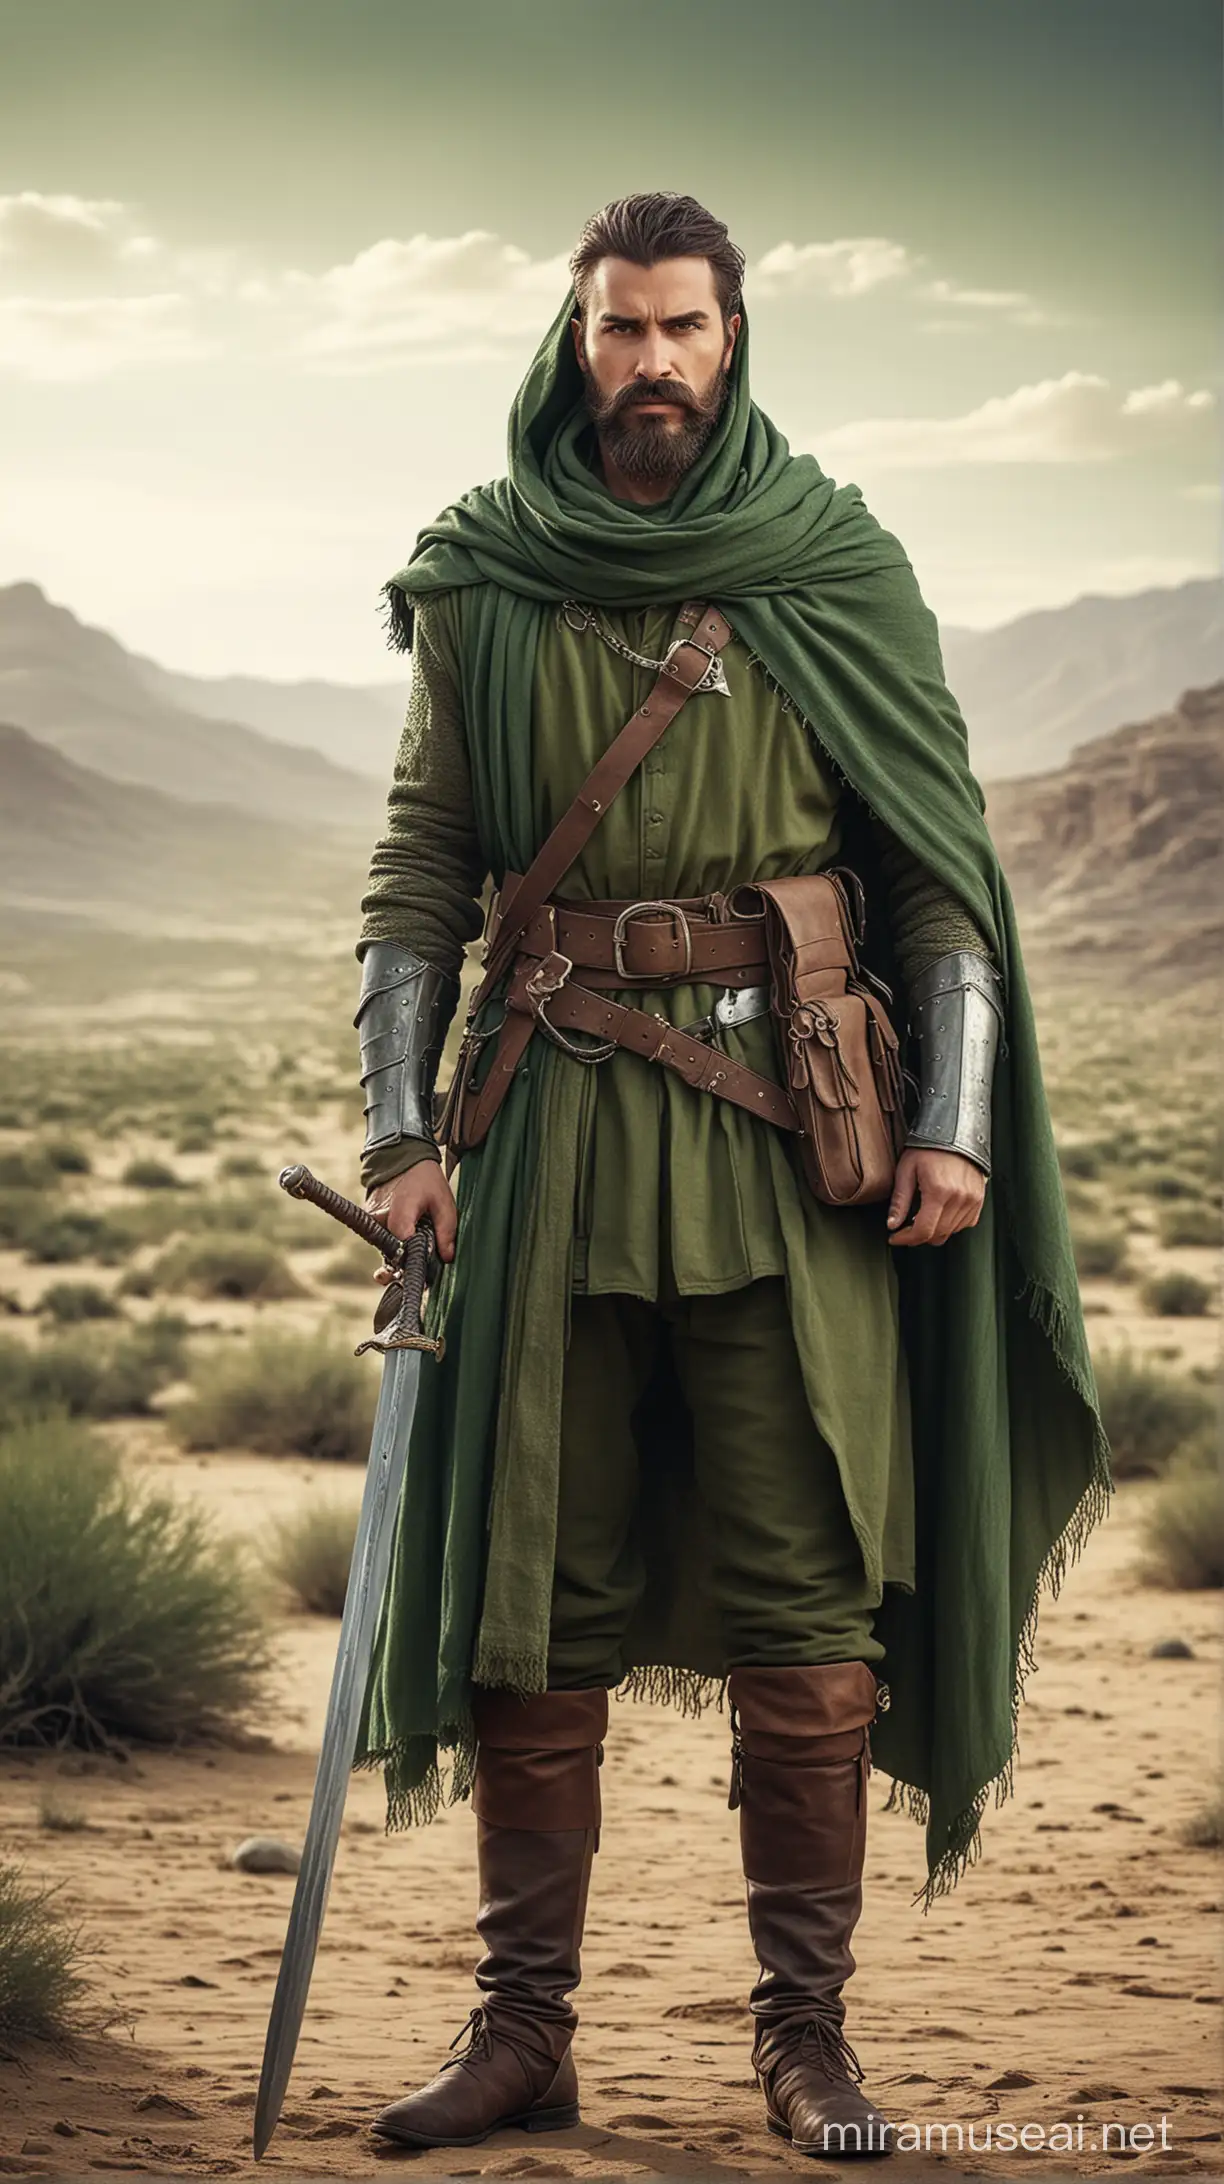 Medieval Warrior in Green Armor Standing in Desolate Desert Landscape